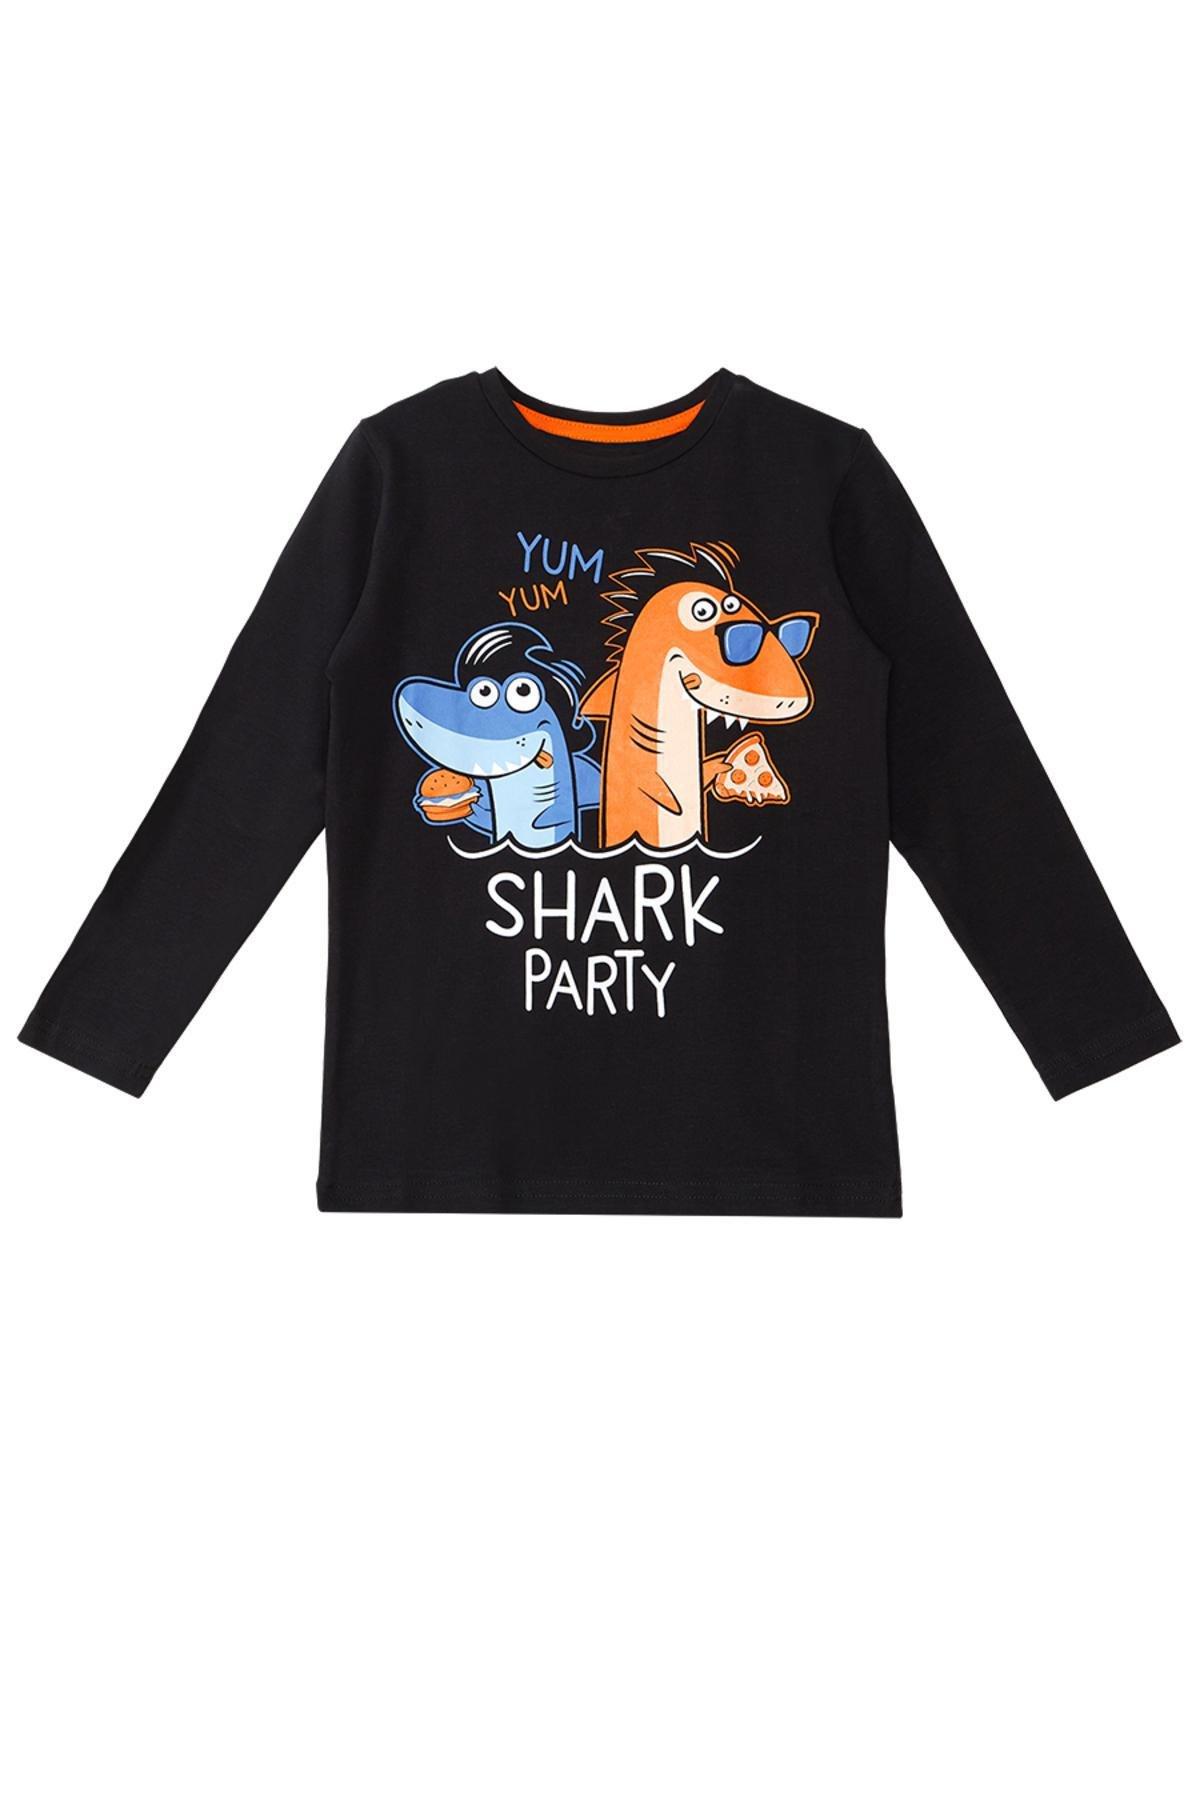 Denokids - Blue Shark Party Co-Ord Set, Kids Boys